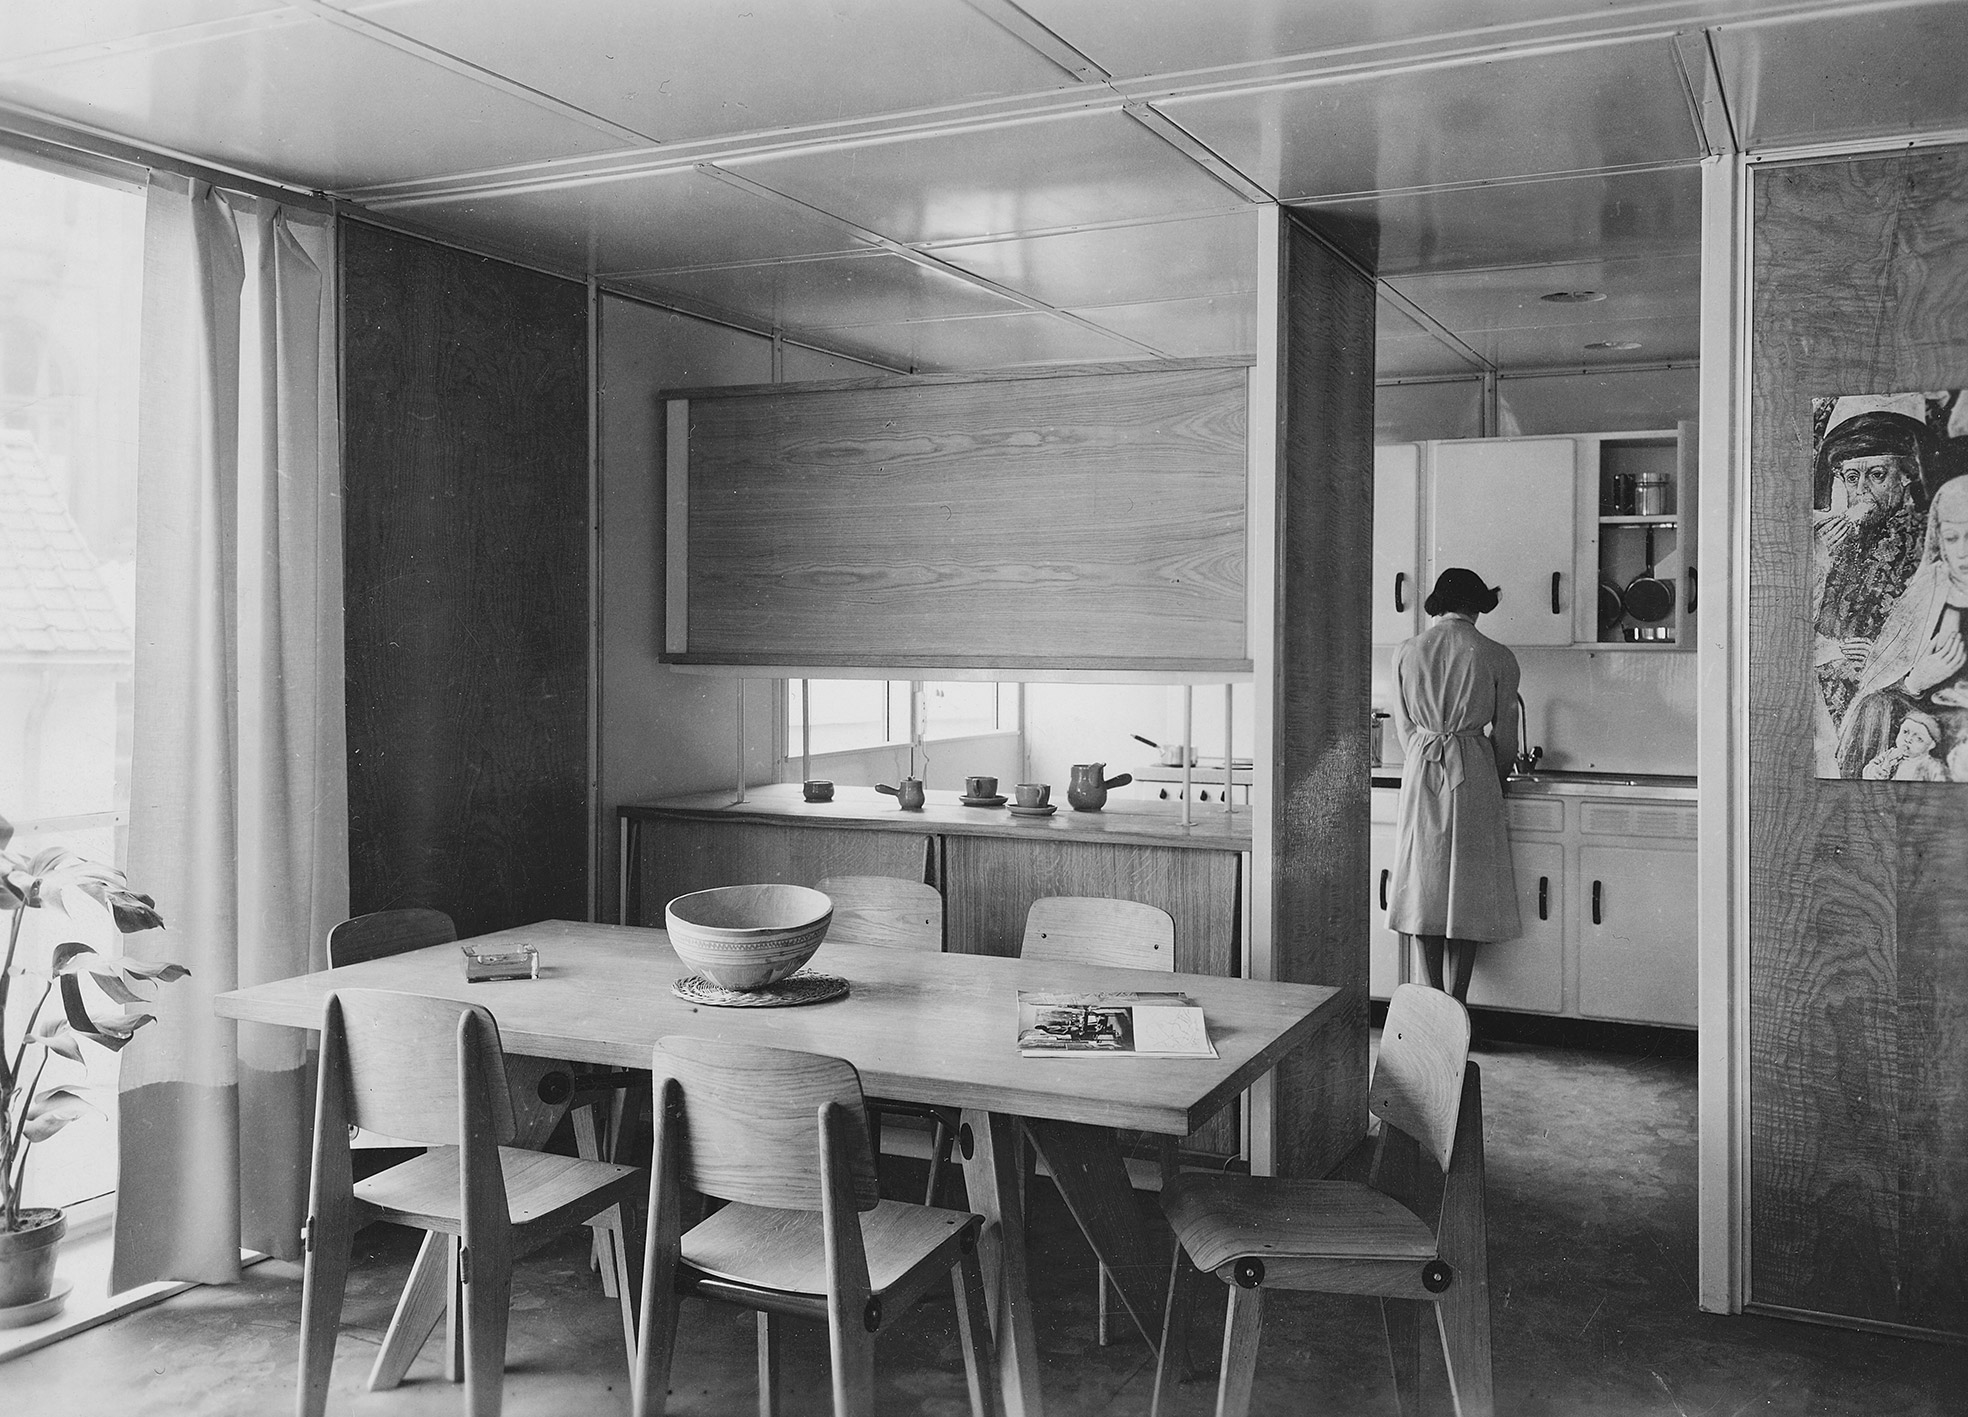 Métropole demountable house Interior views, with Ateliers Jean Prouvé furnishings, of the 8x8 prototype at the Housing Exhibition, Salon des Arts Ménagers, Grand Palais, Paris, February 1950.